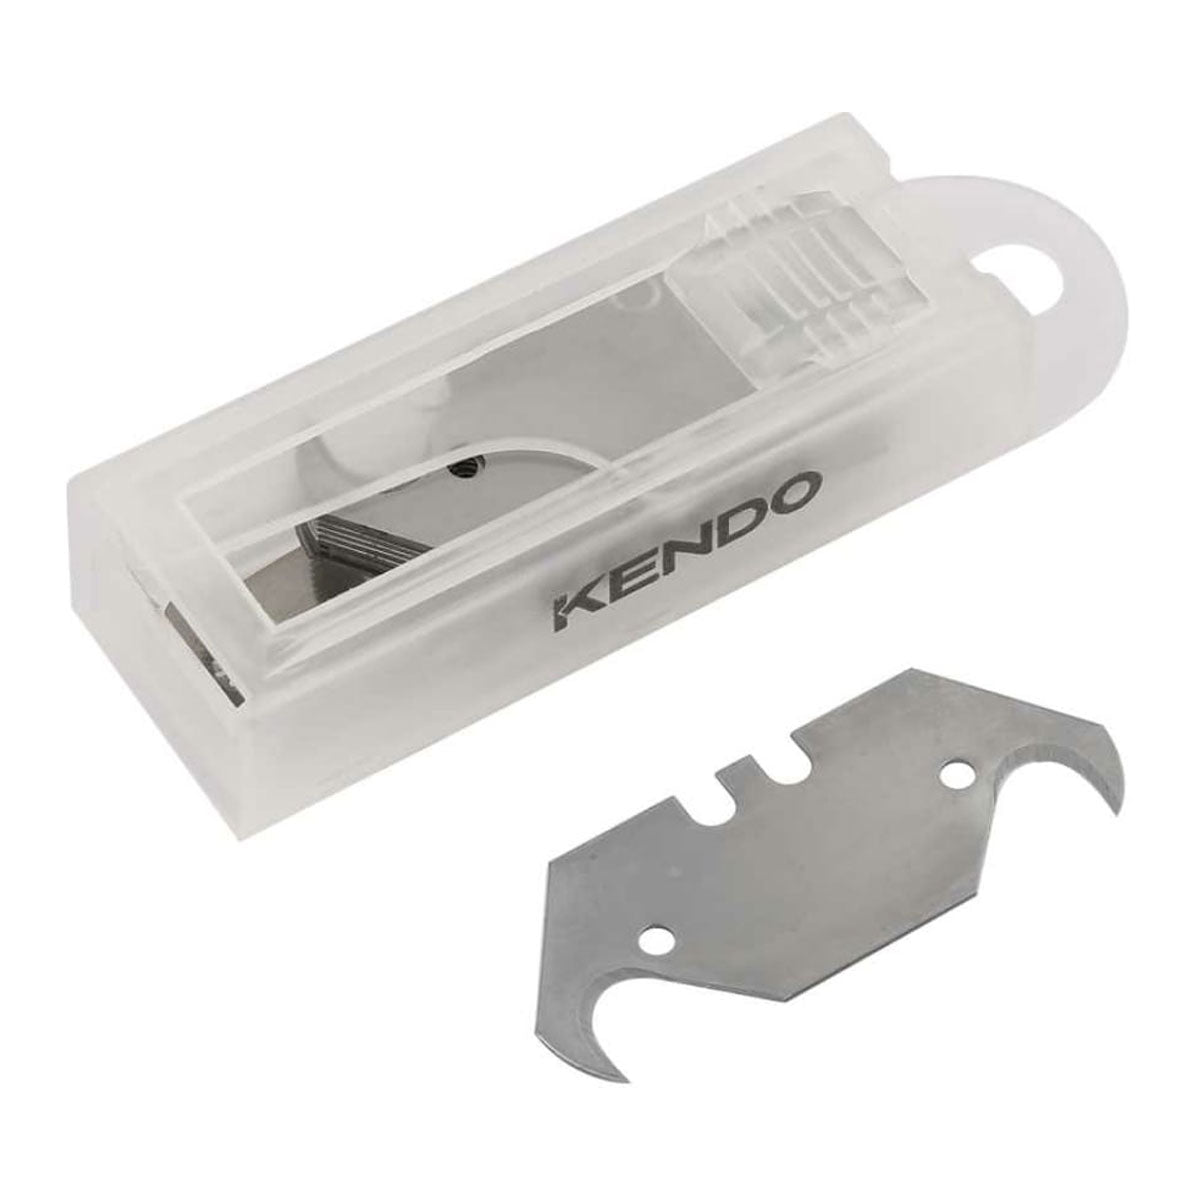 Kendo 19mm Hooked Knife Blade 1